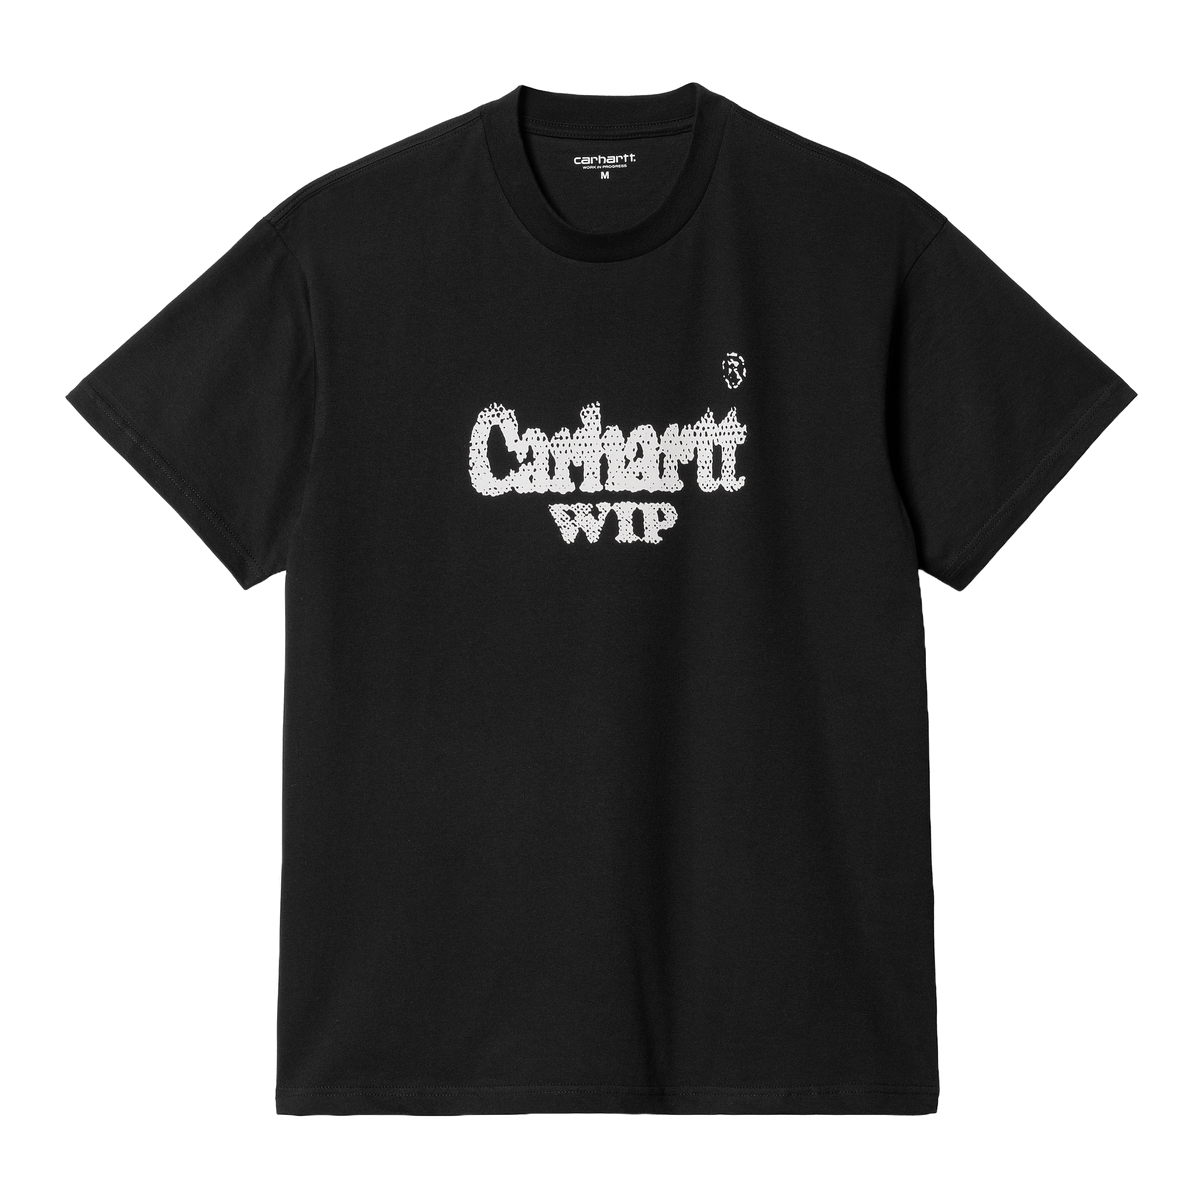 Carhartt Wip Men's T-Shirt Spree Halftone Black